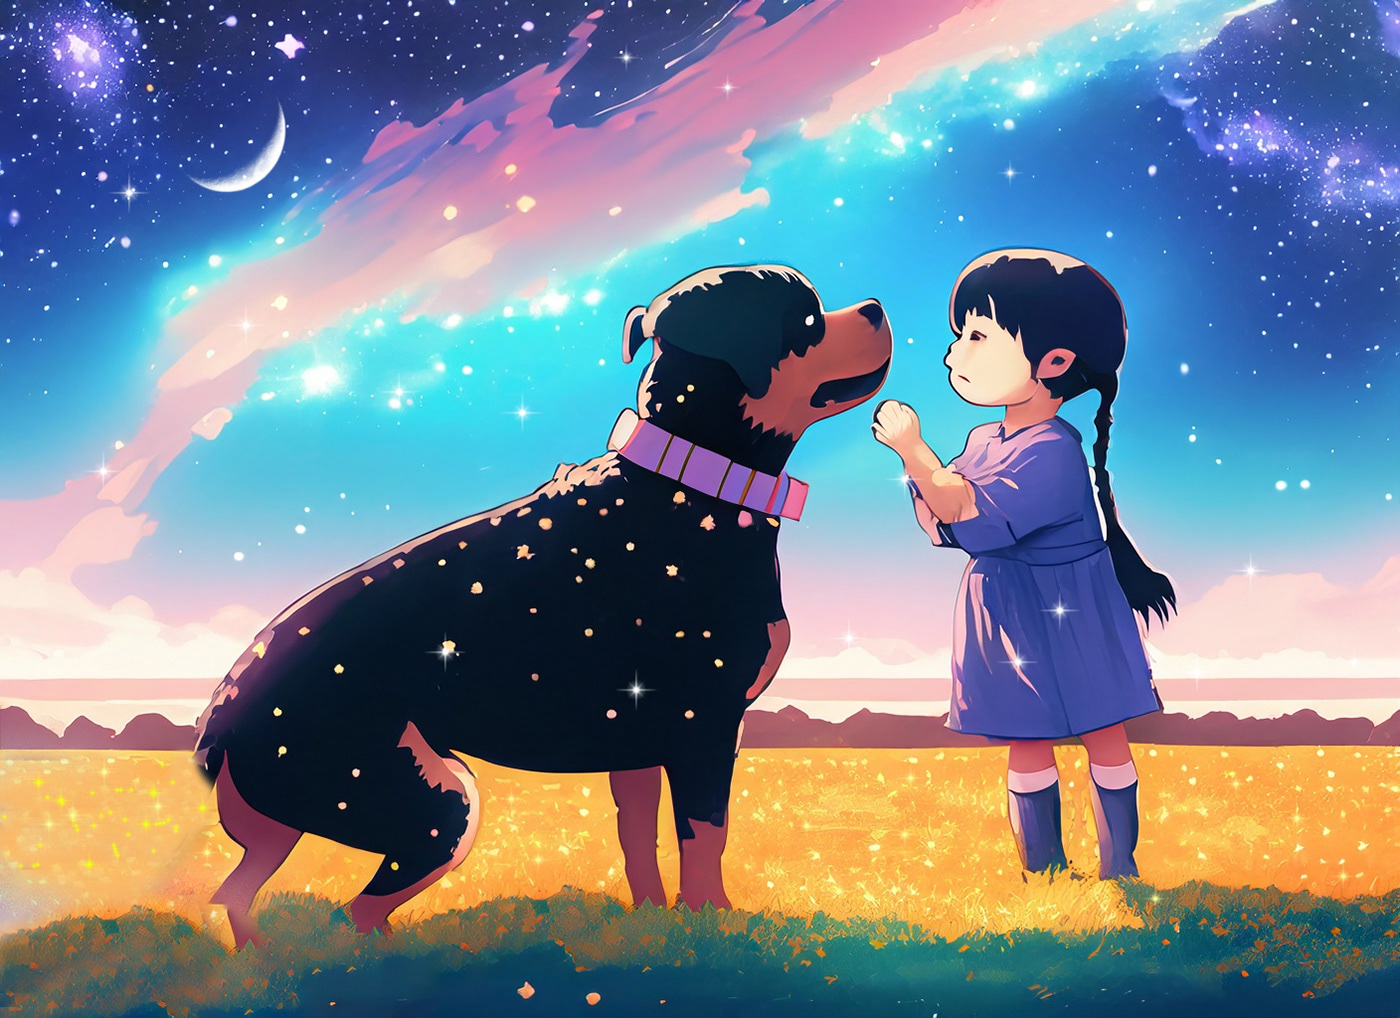 Pet anime art fouziaabida firefly adobe artwork Digital Art  dog fouzia